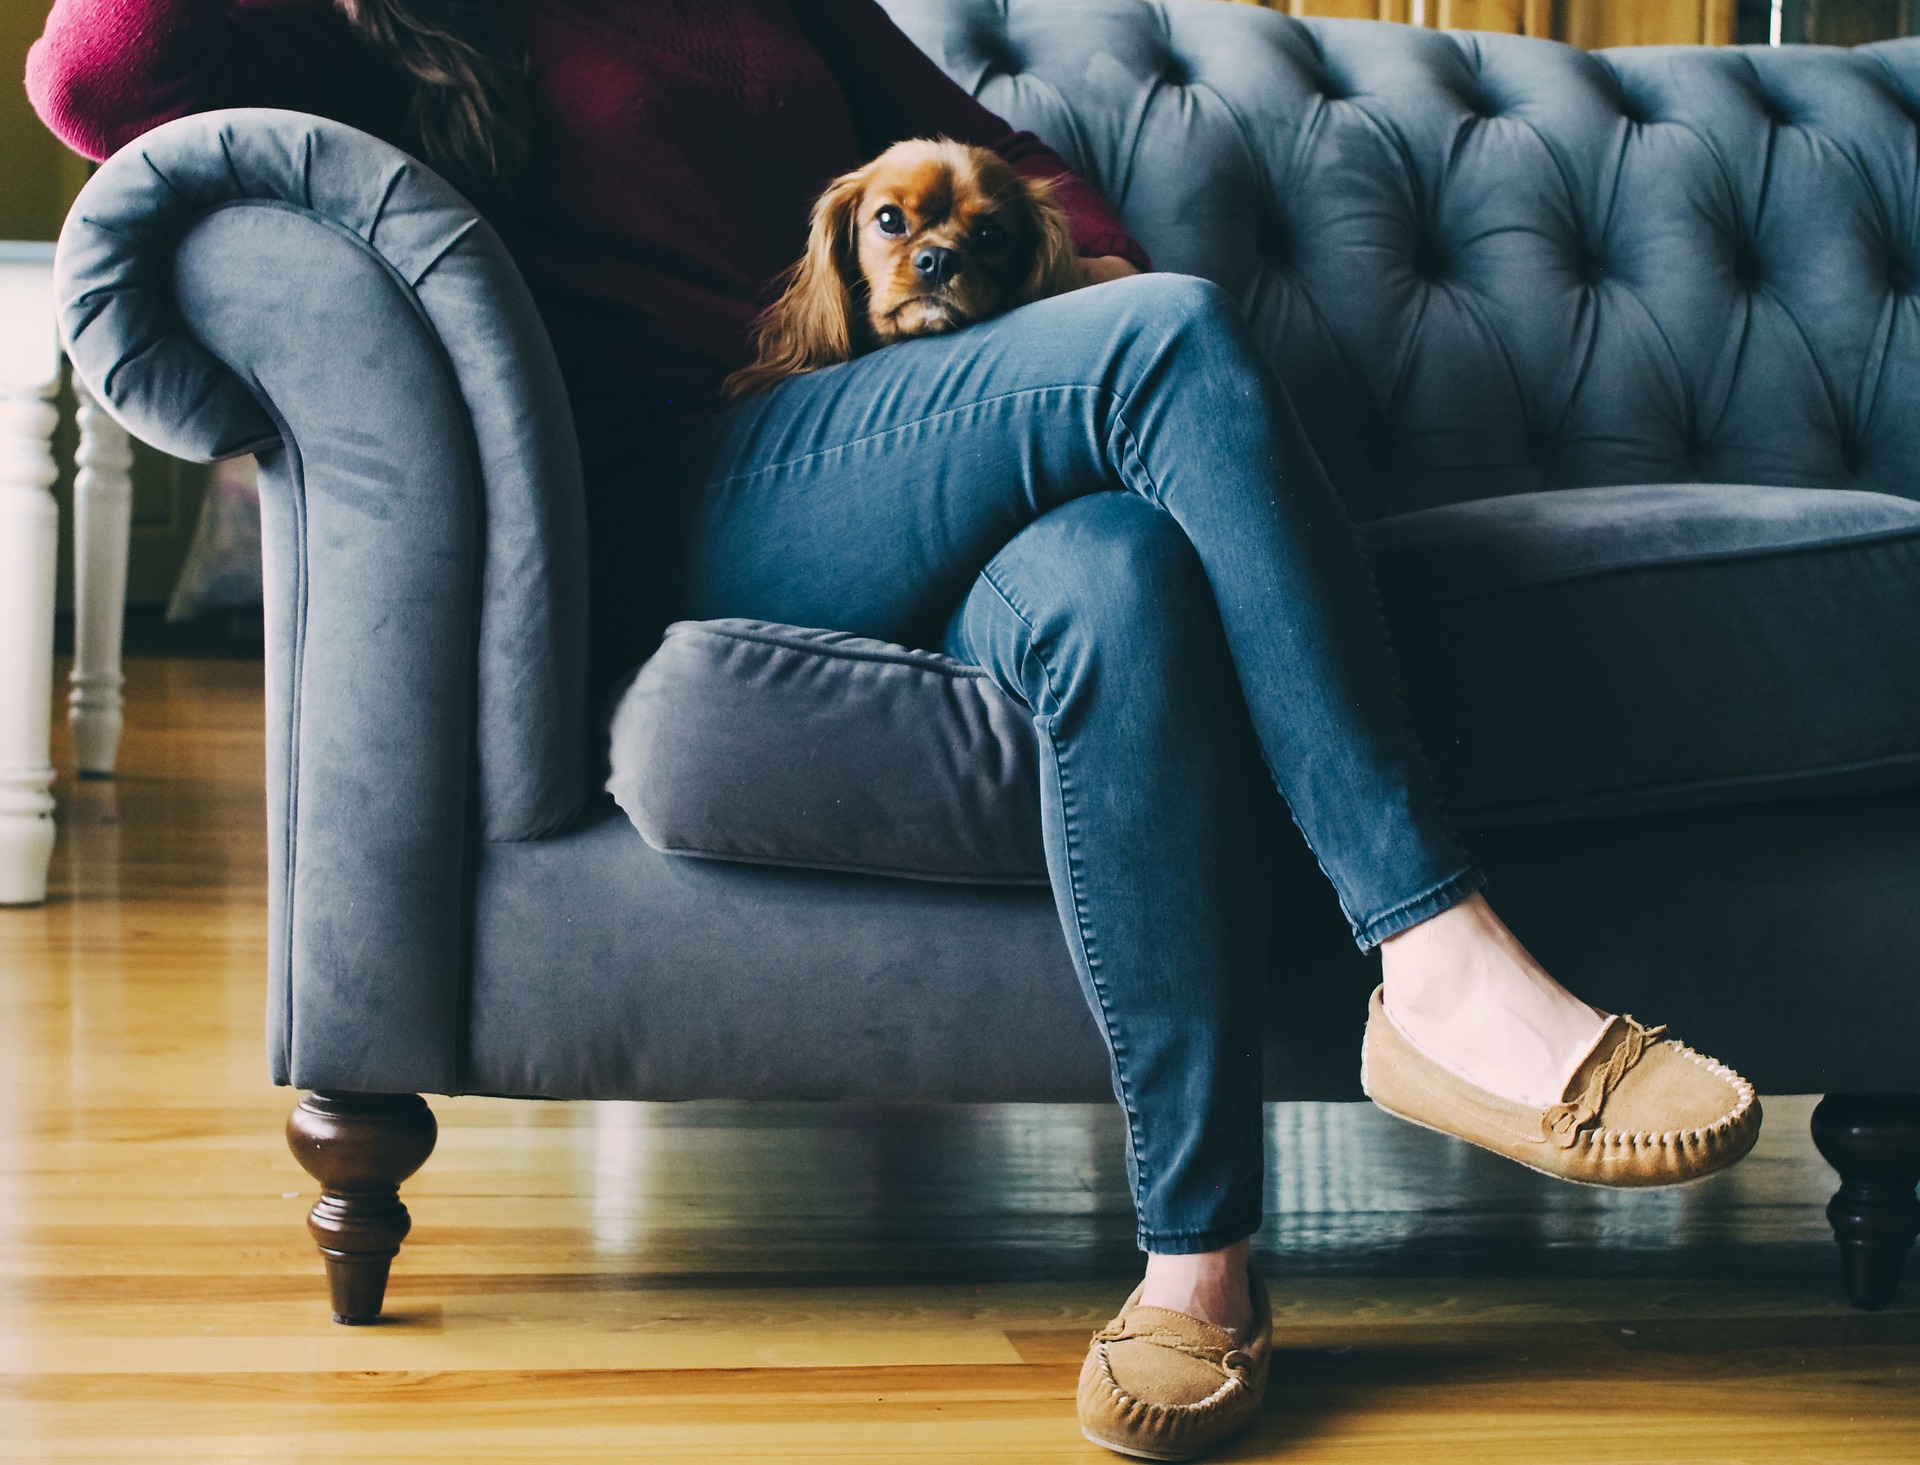 couch-potato-dog.jpg